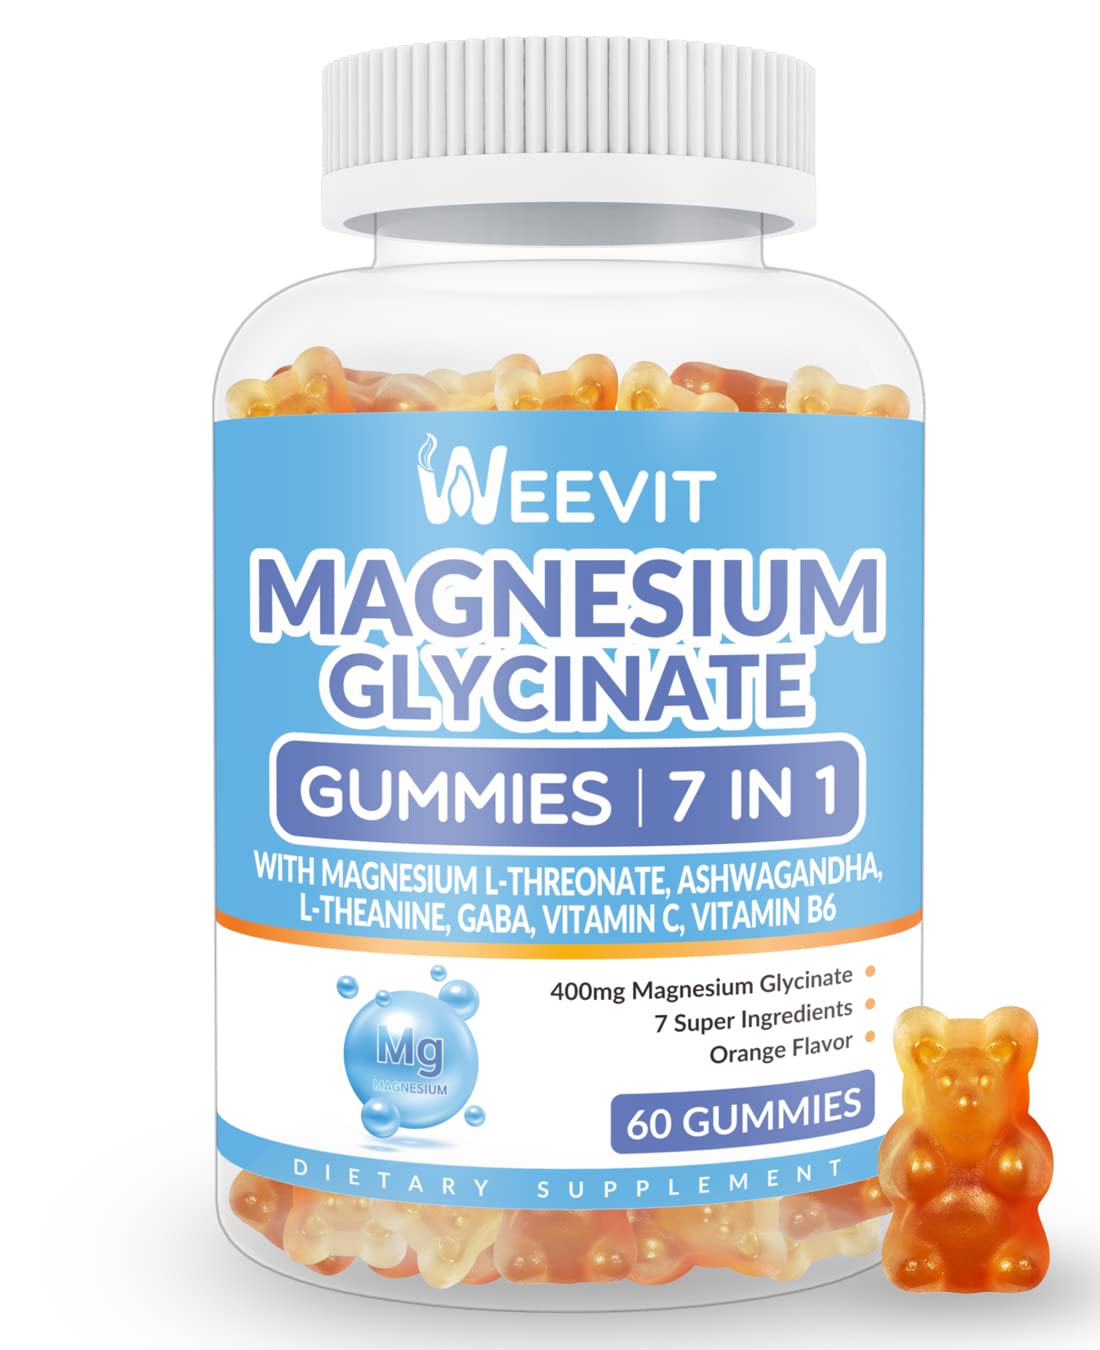 Magnesium Glycinate Gummies 400mg for Women and Men with Magnesium L-Threonate 200mg | Magnesium Supplements Gummies with Ashwagandha, L-Theanine, GABA, Vitamin C, B6